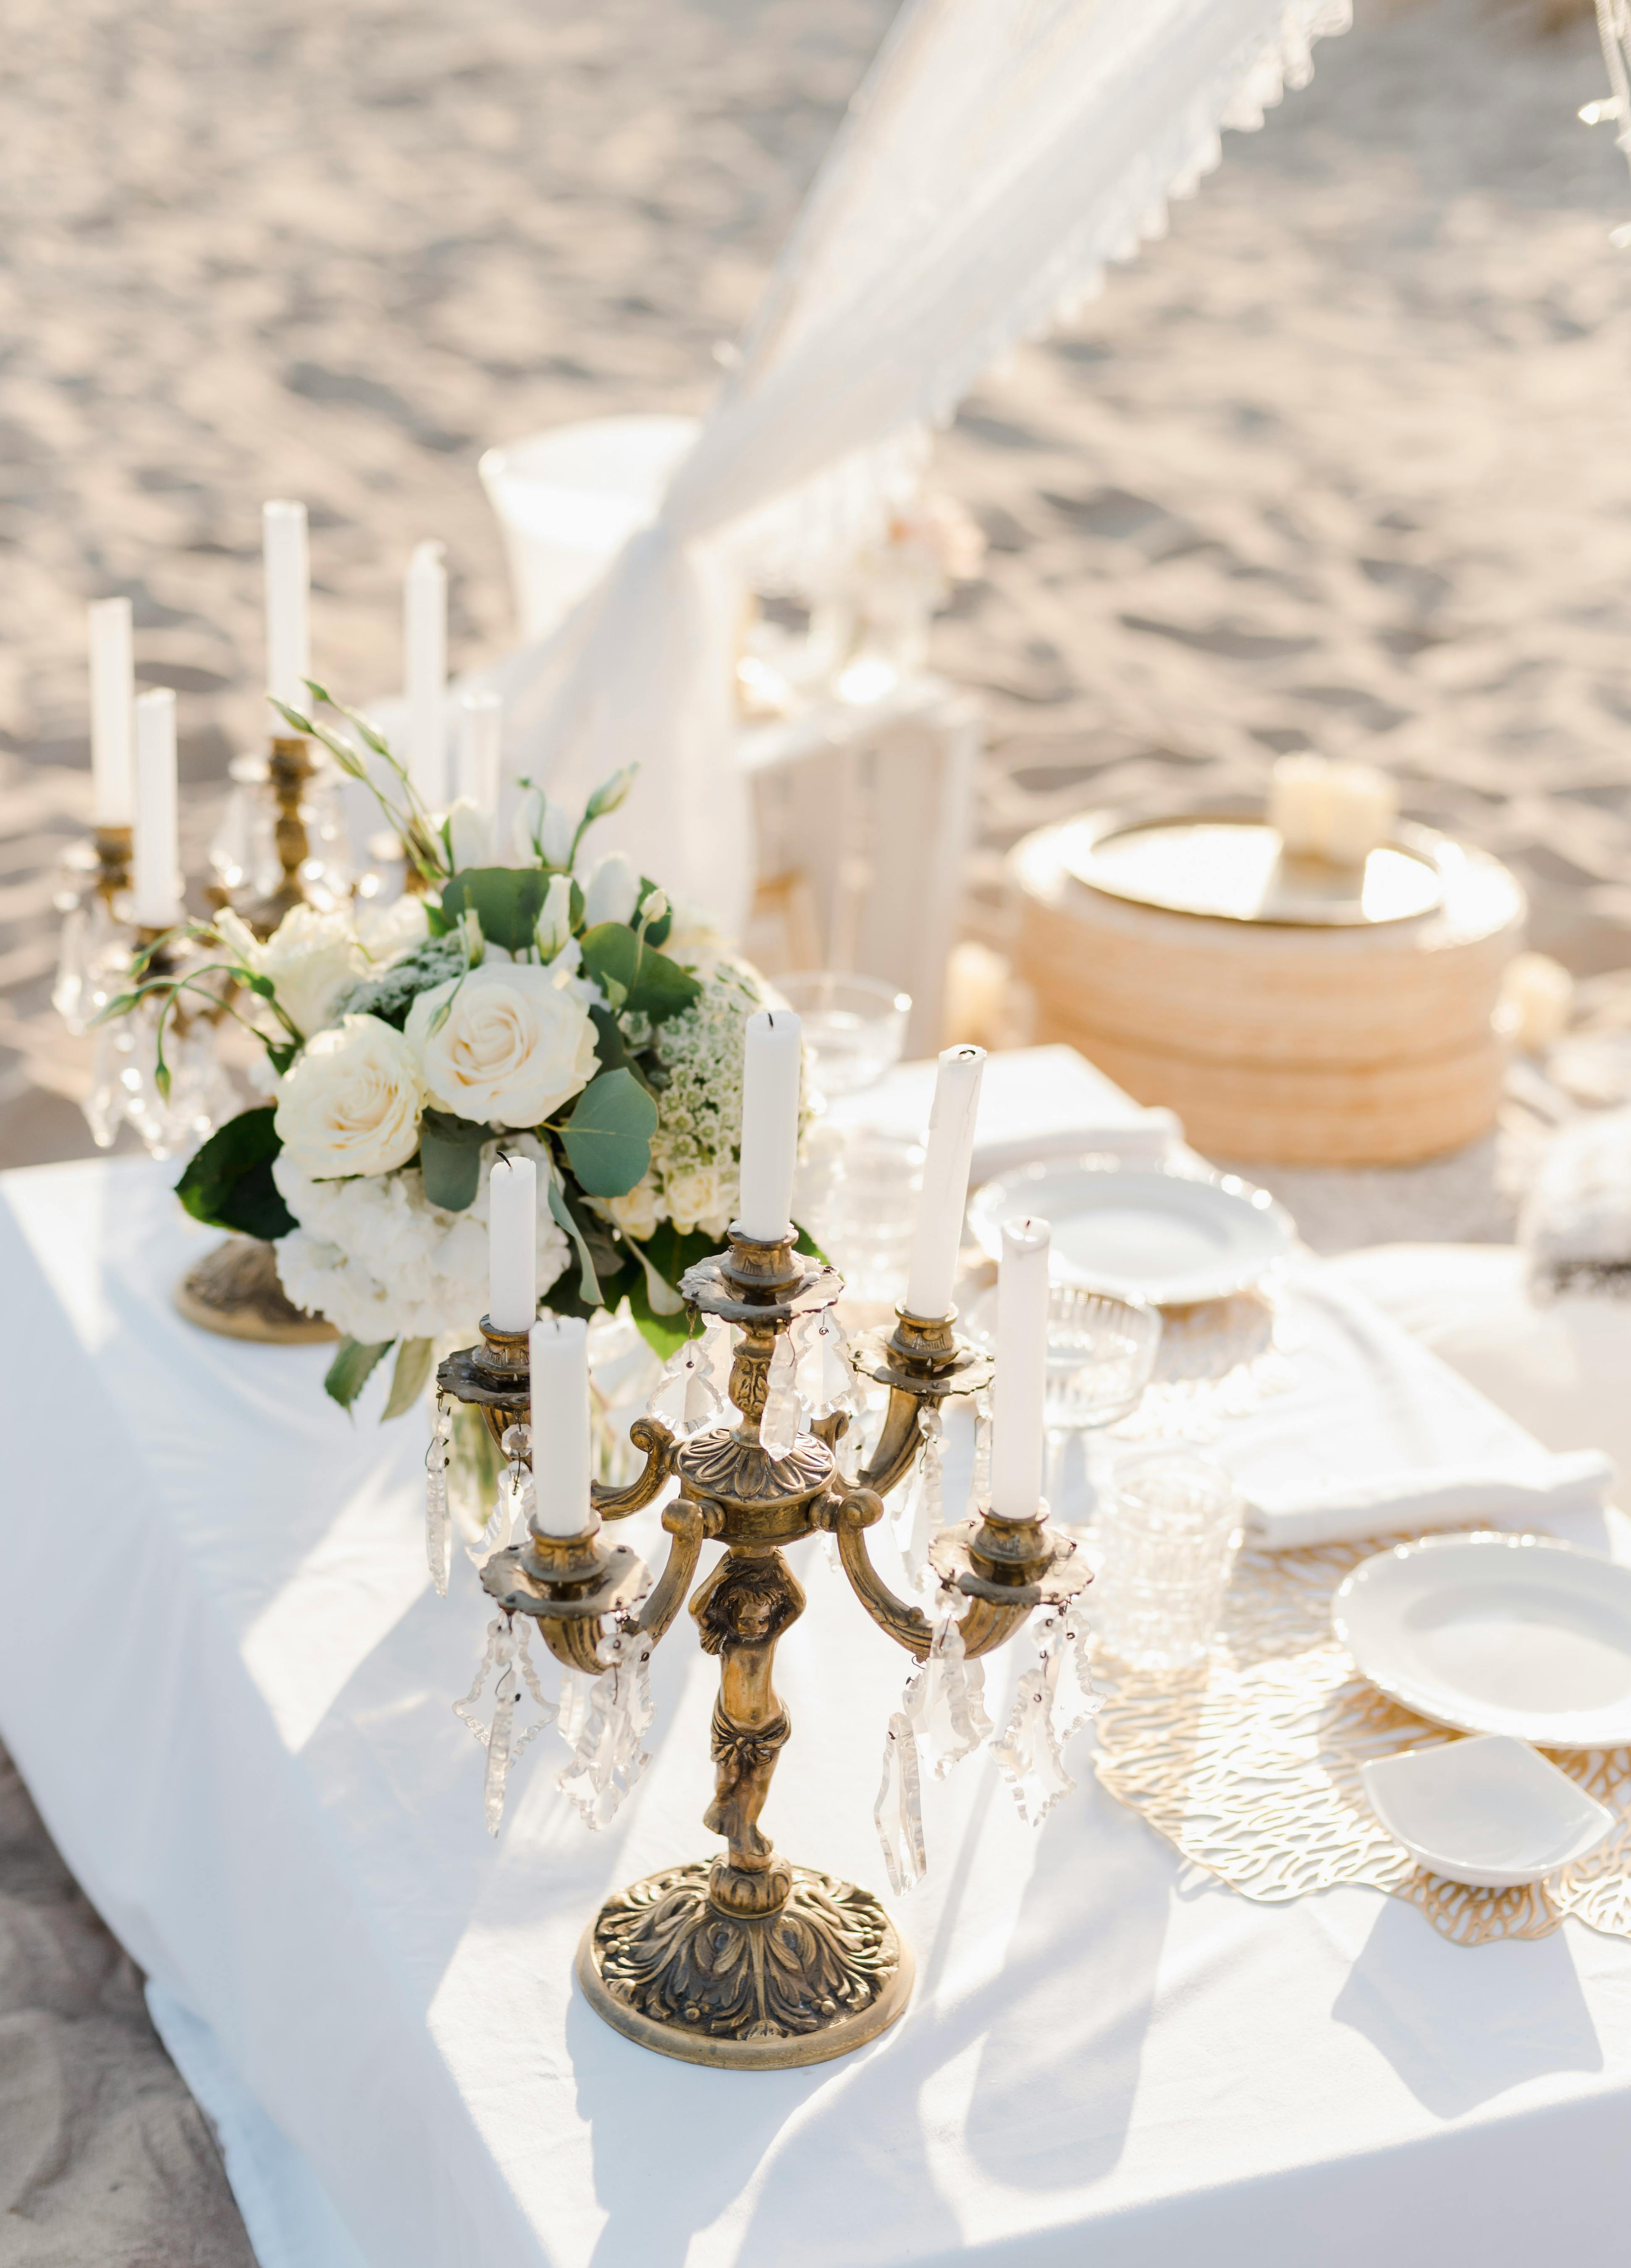 Elegant Table setting at Beach · Free Stock Photo